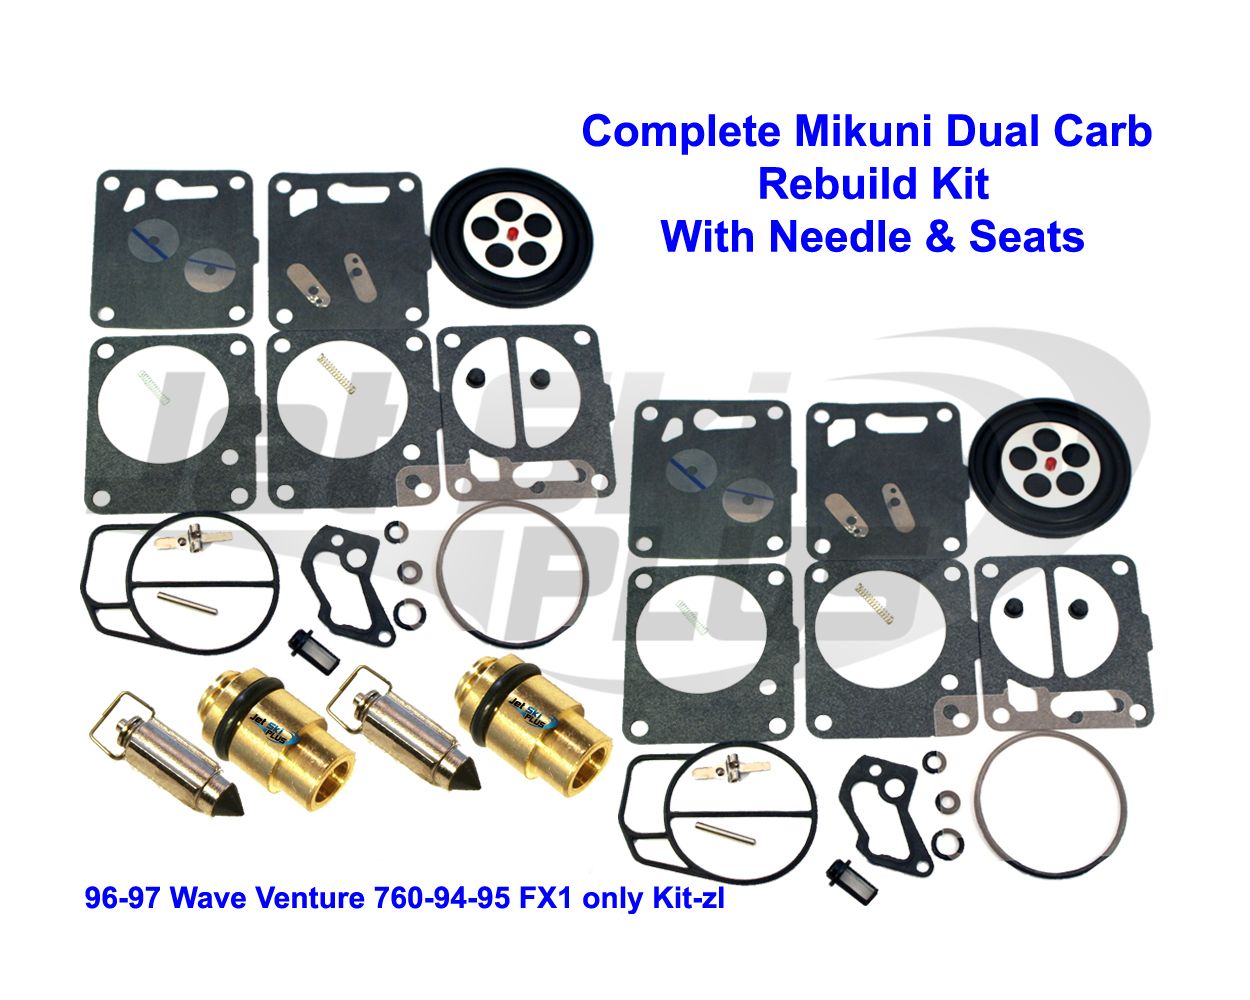 Yamaha Dual Mikuni Rebuild Kit Needle/Seat-Carb Base Gasket SuperJet WaveVenture 